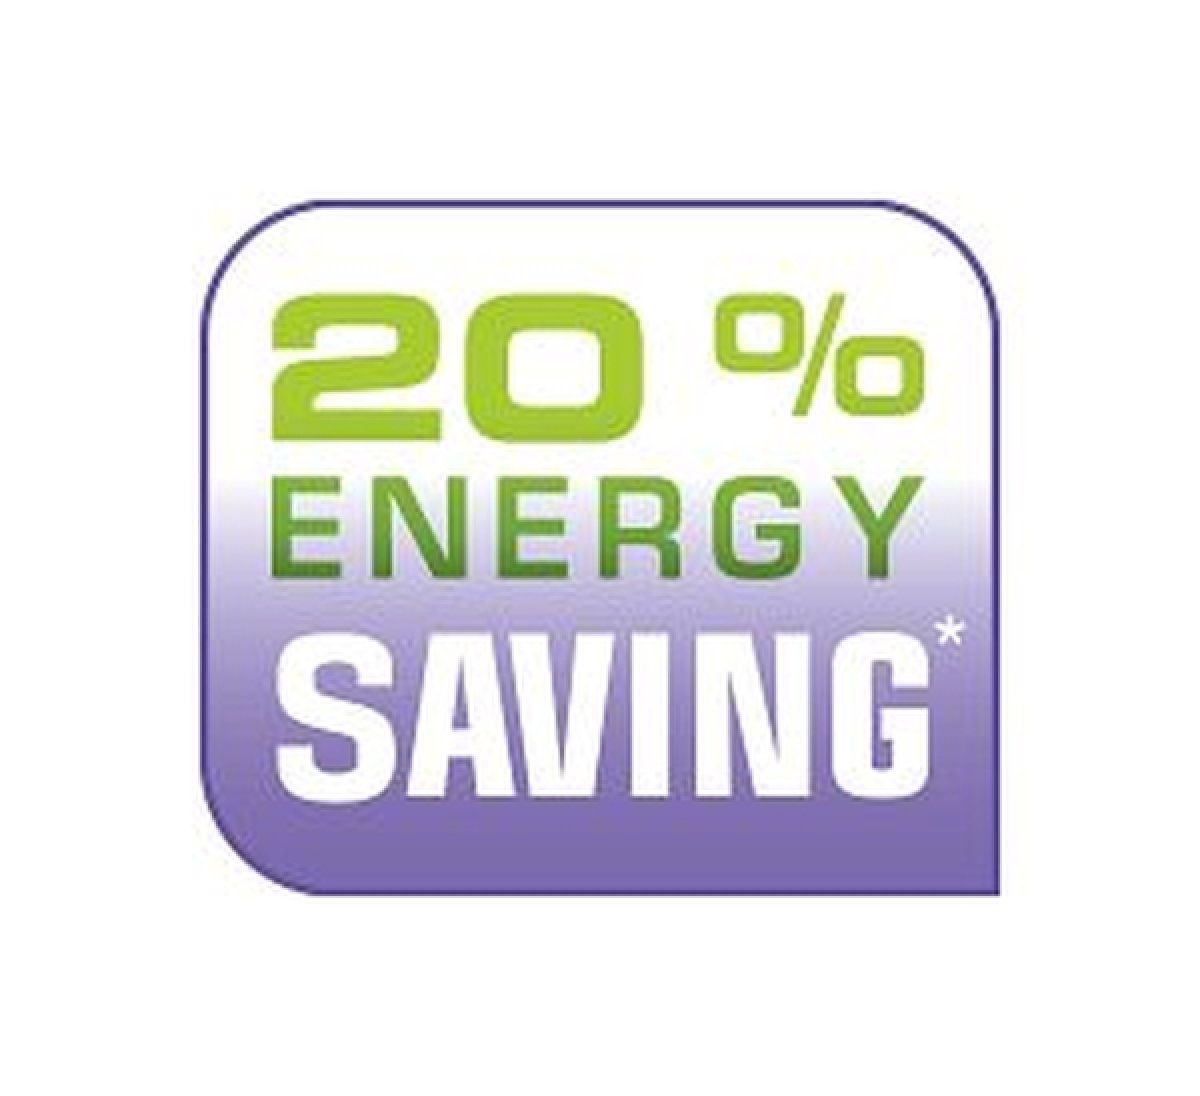 Nastavení Eco pro úsporu energie